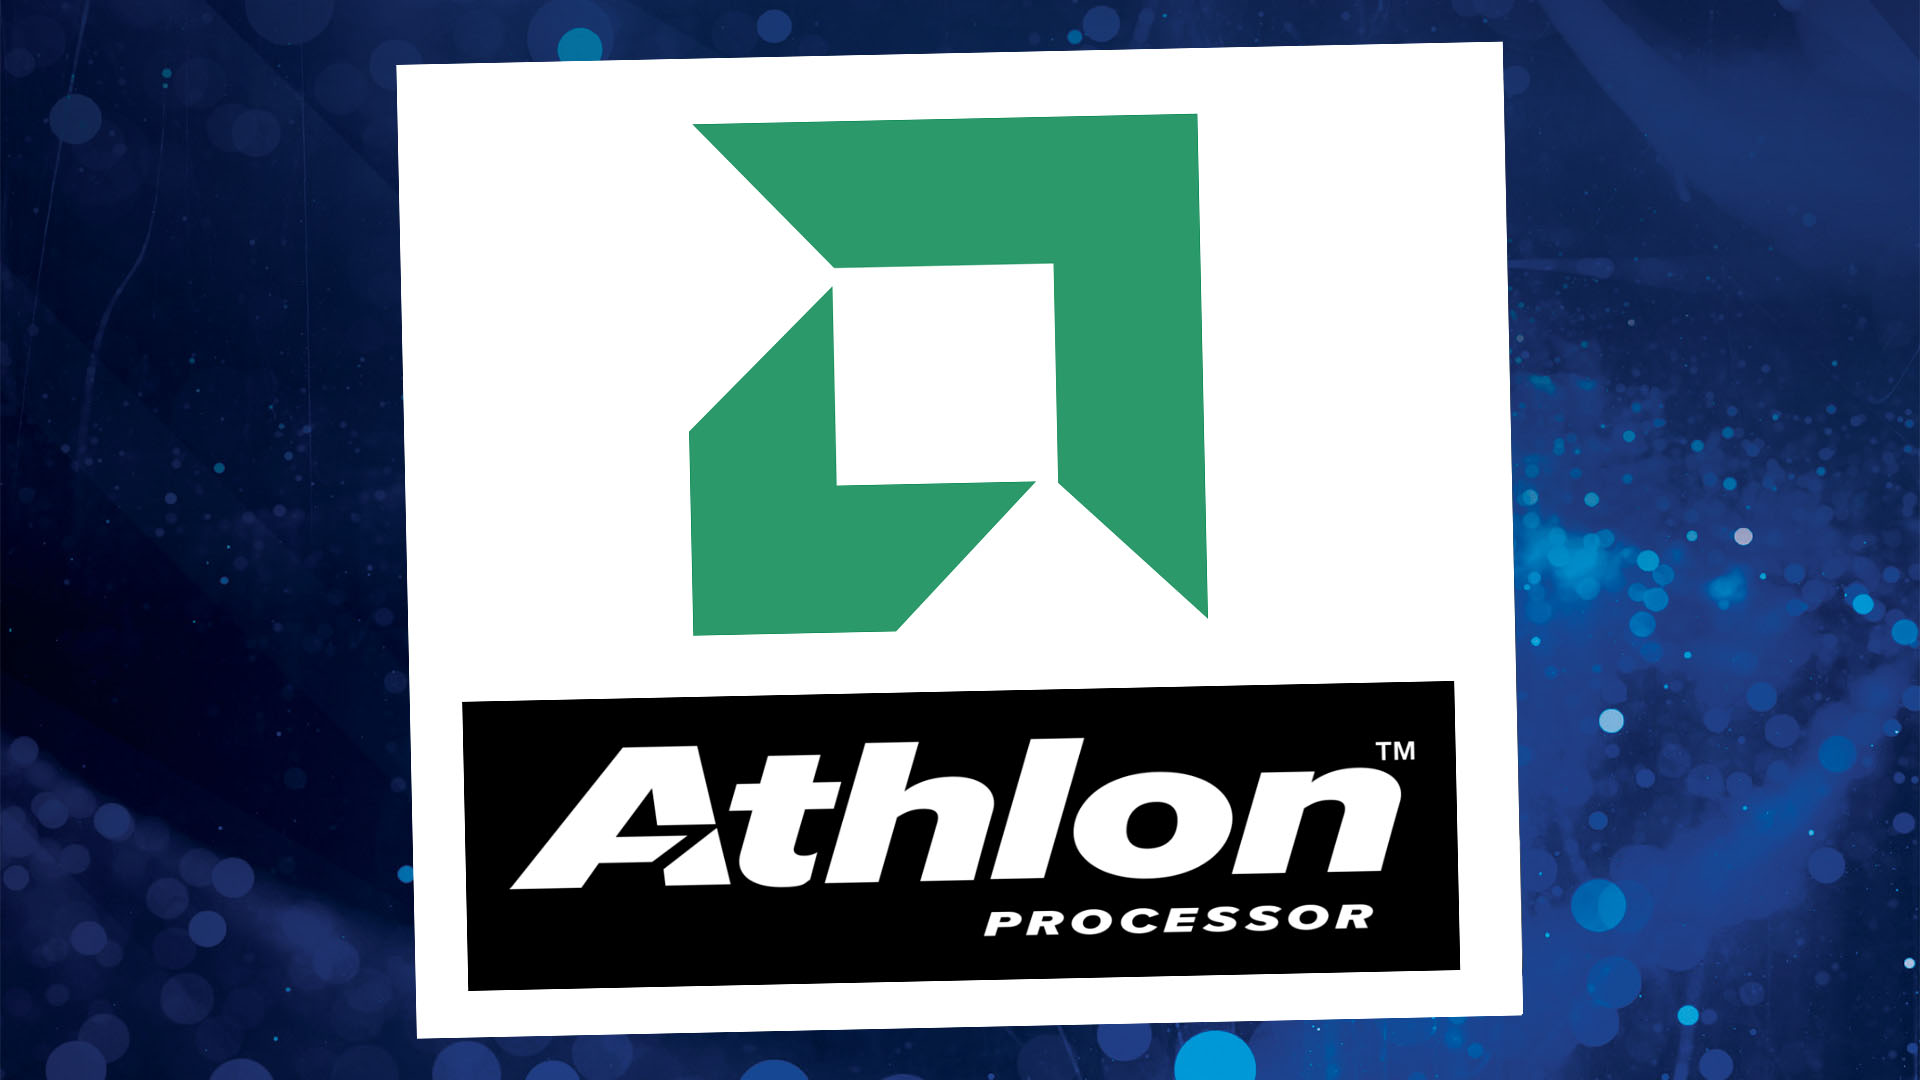 AMD Athlon logo on blue background